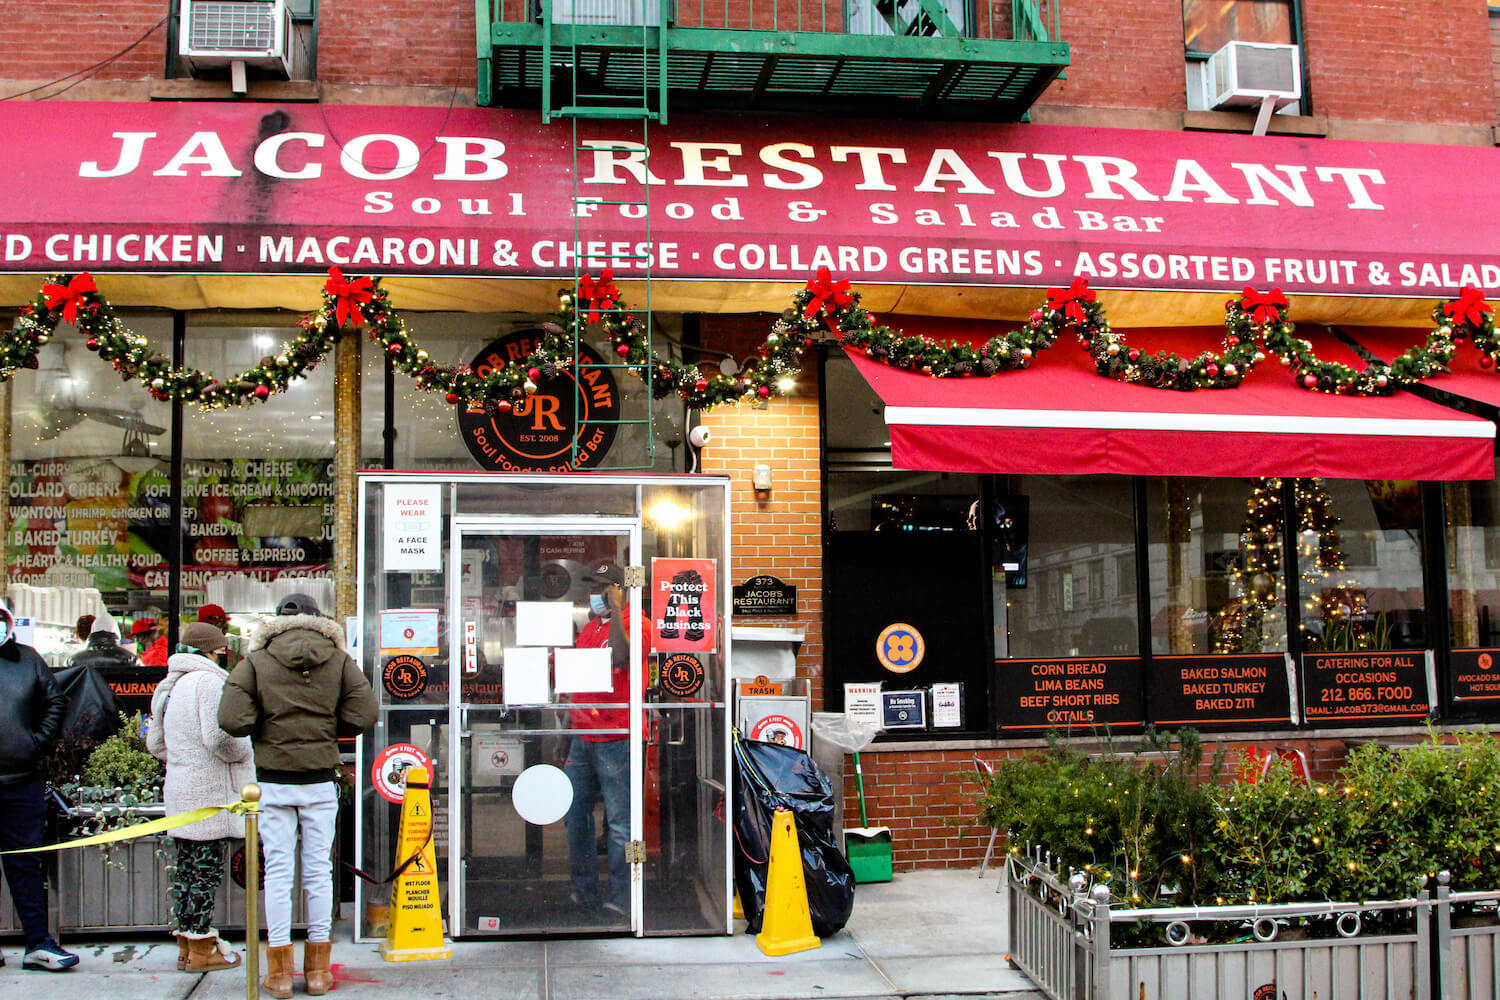 Exterior of Jacob Restaurant Soul Food & Salad Bar. December 2020